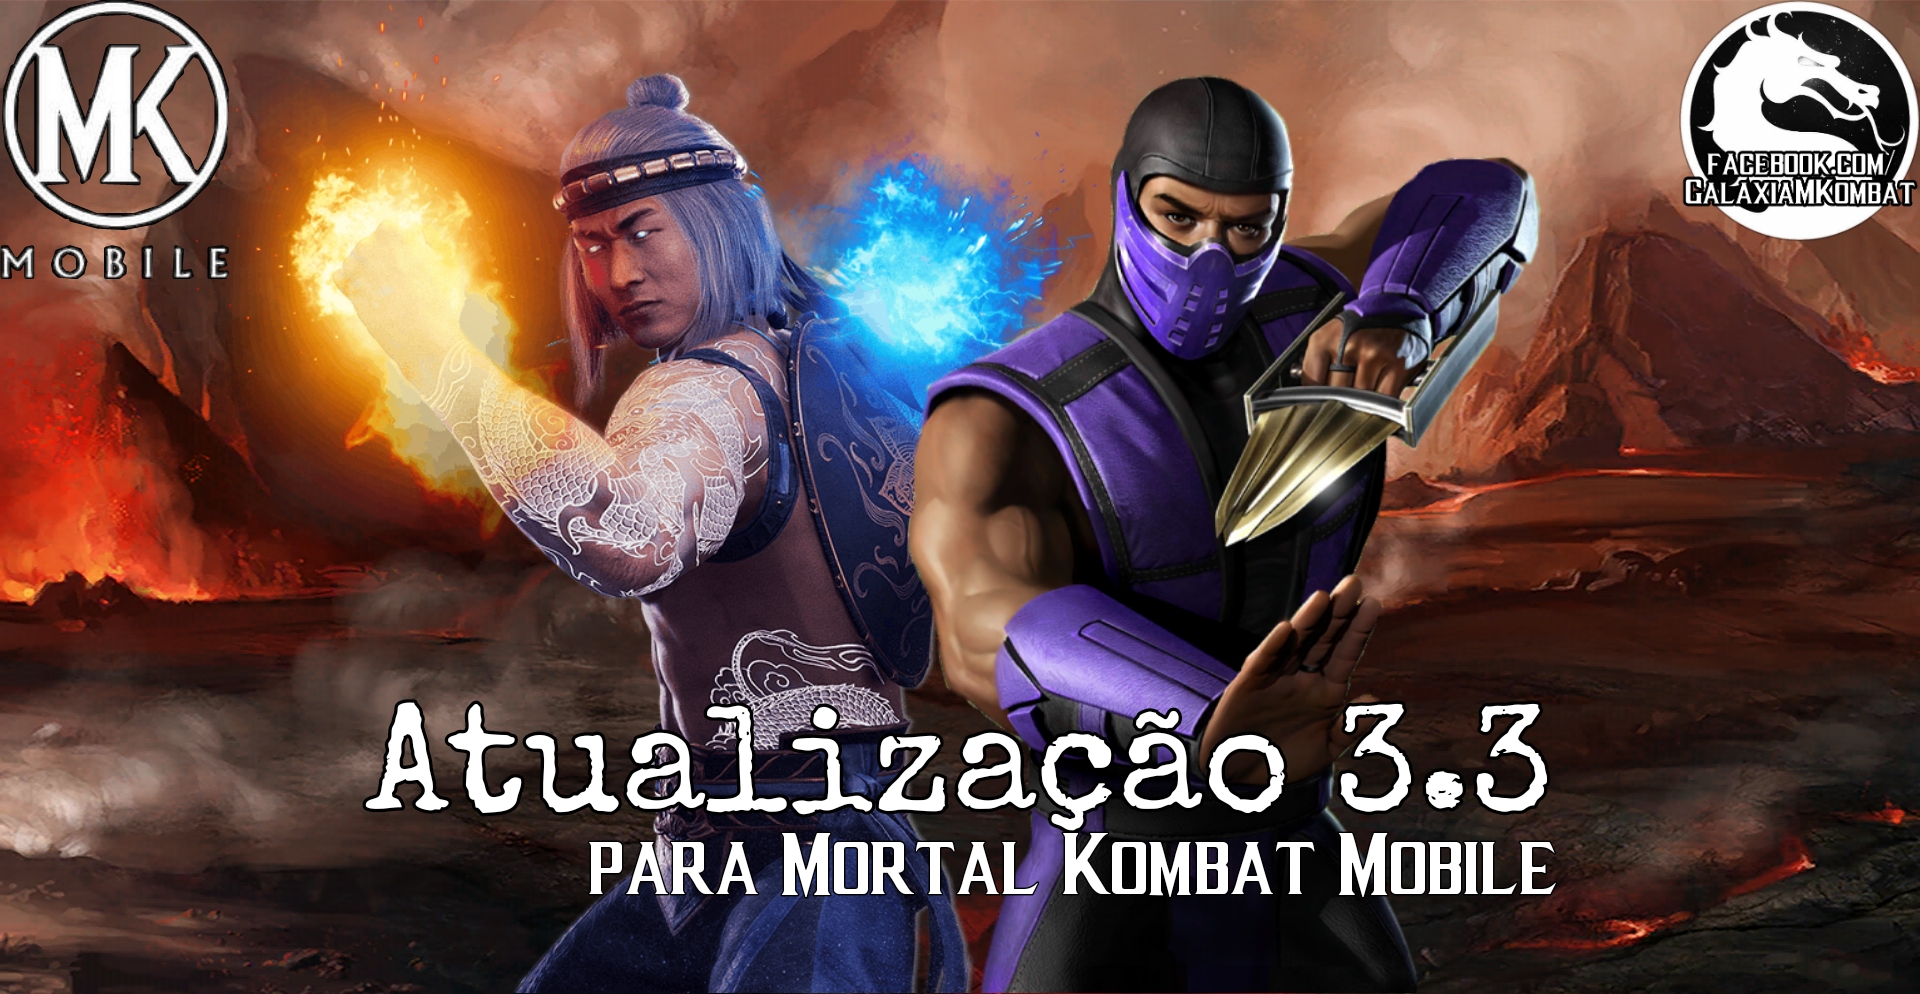 Rain Mortal Kombat 11 Kombat Pack 2 Render Art - Mortal Kombat Online